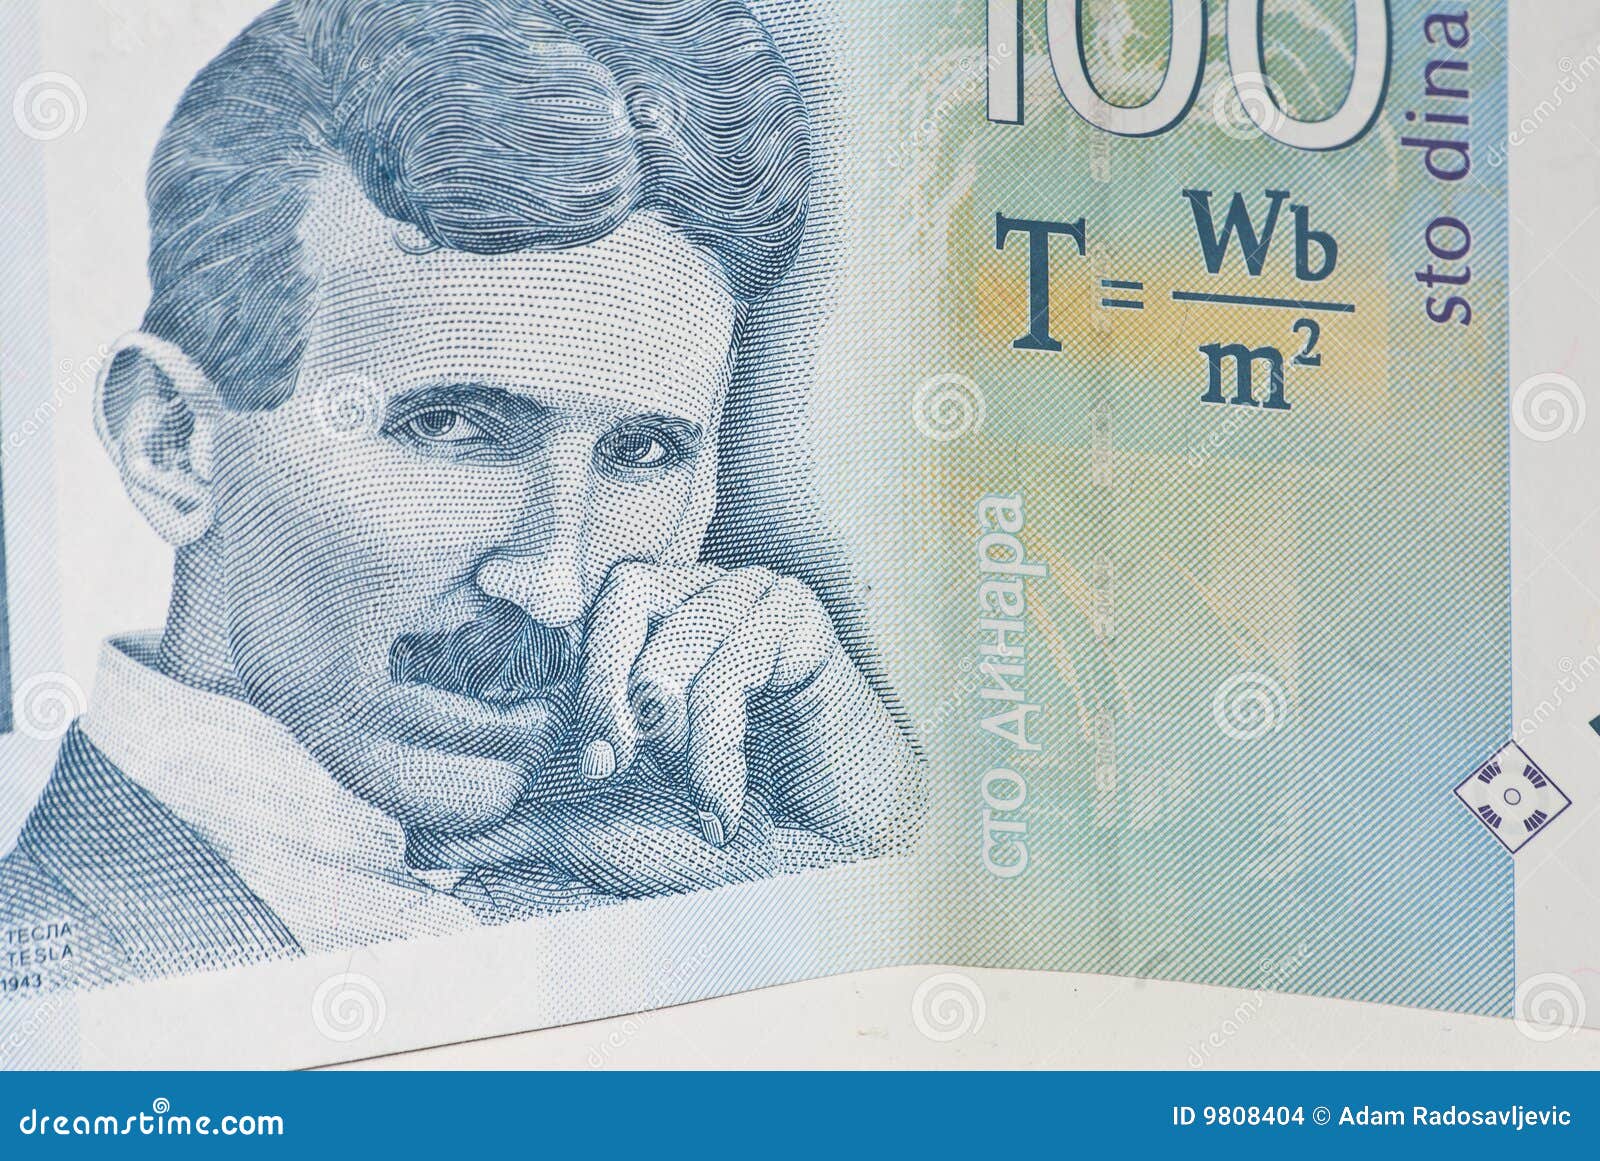 Details about   SERBIA Nikola Tesla 1000 dinars banknote UNC 1991 